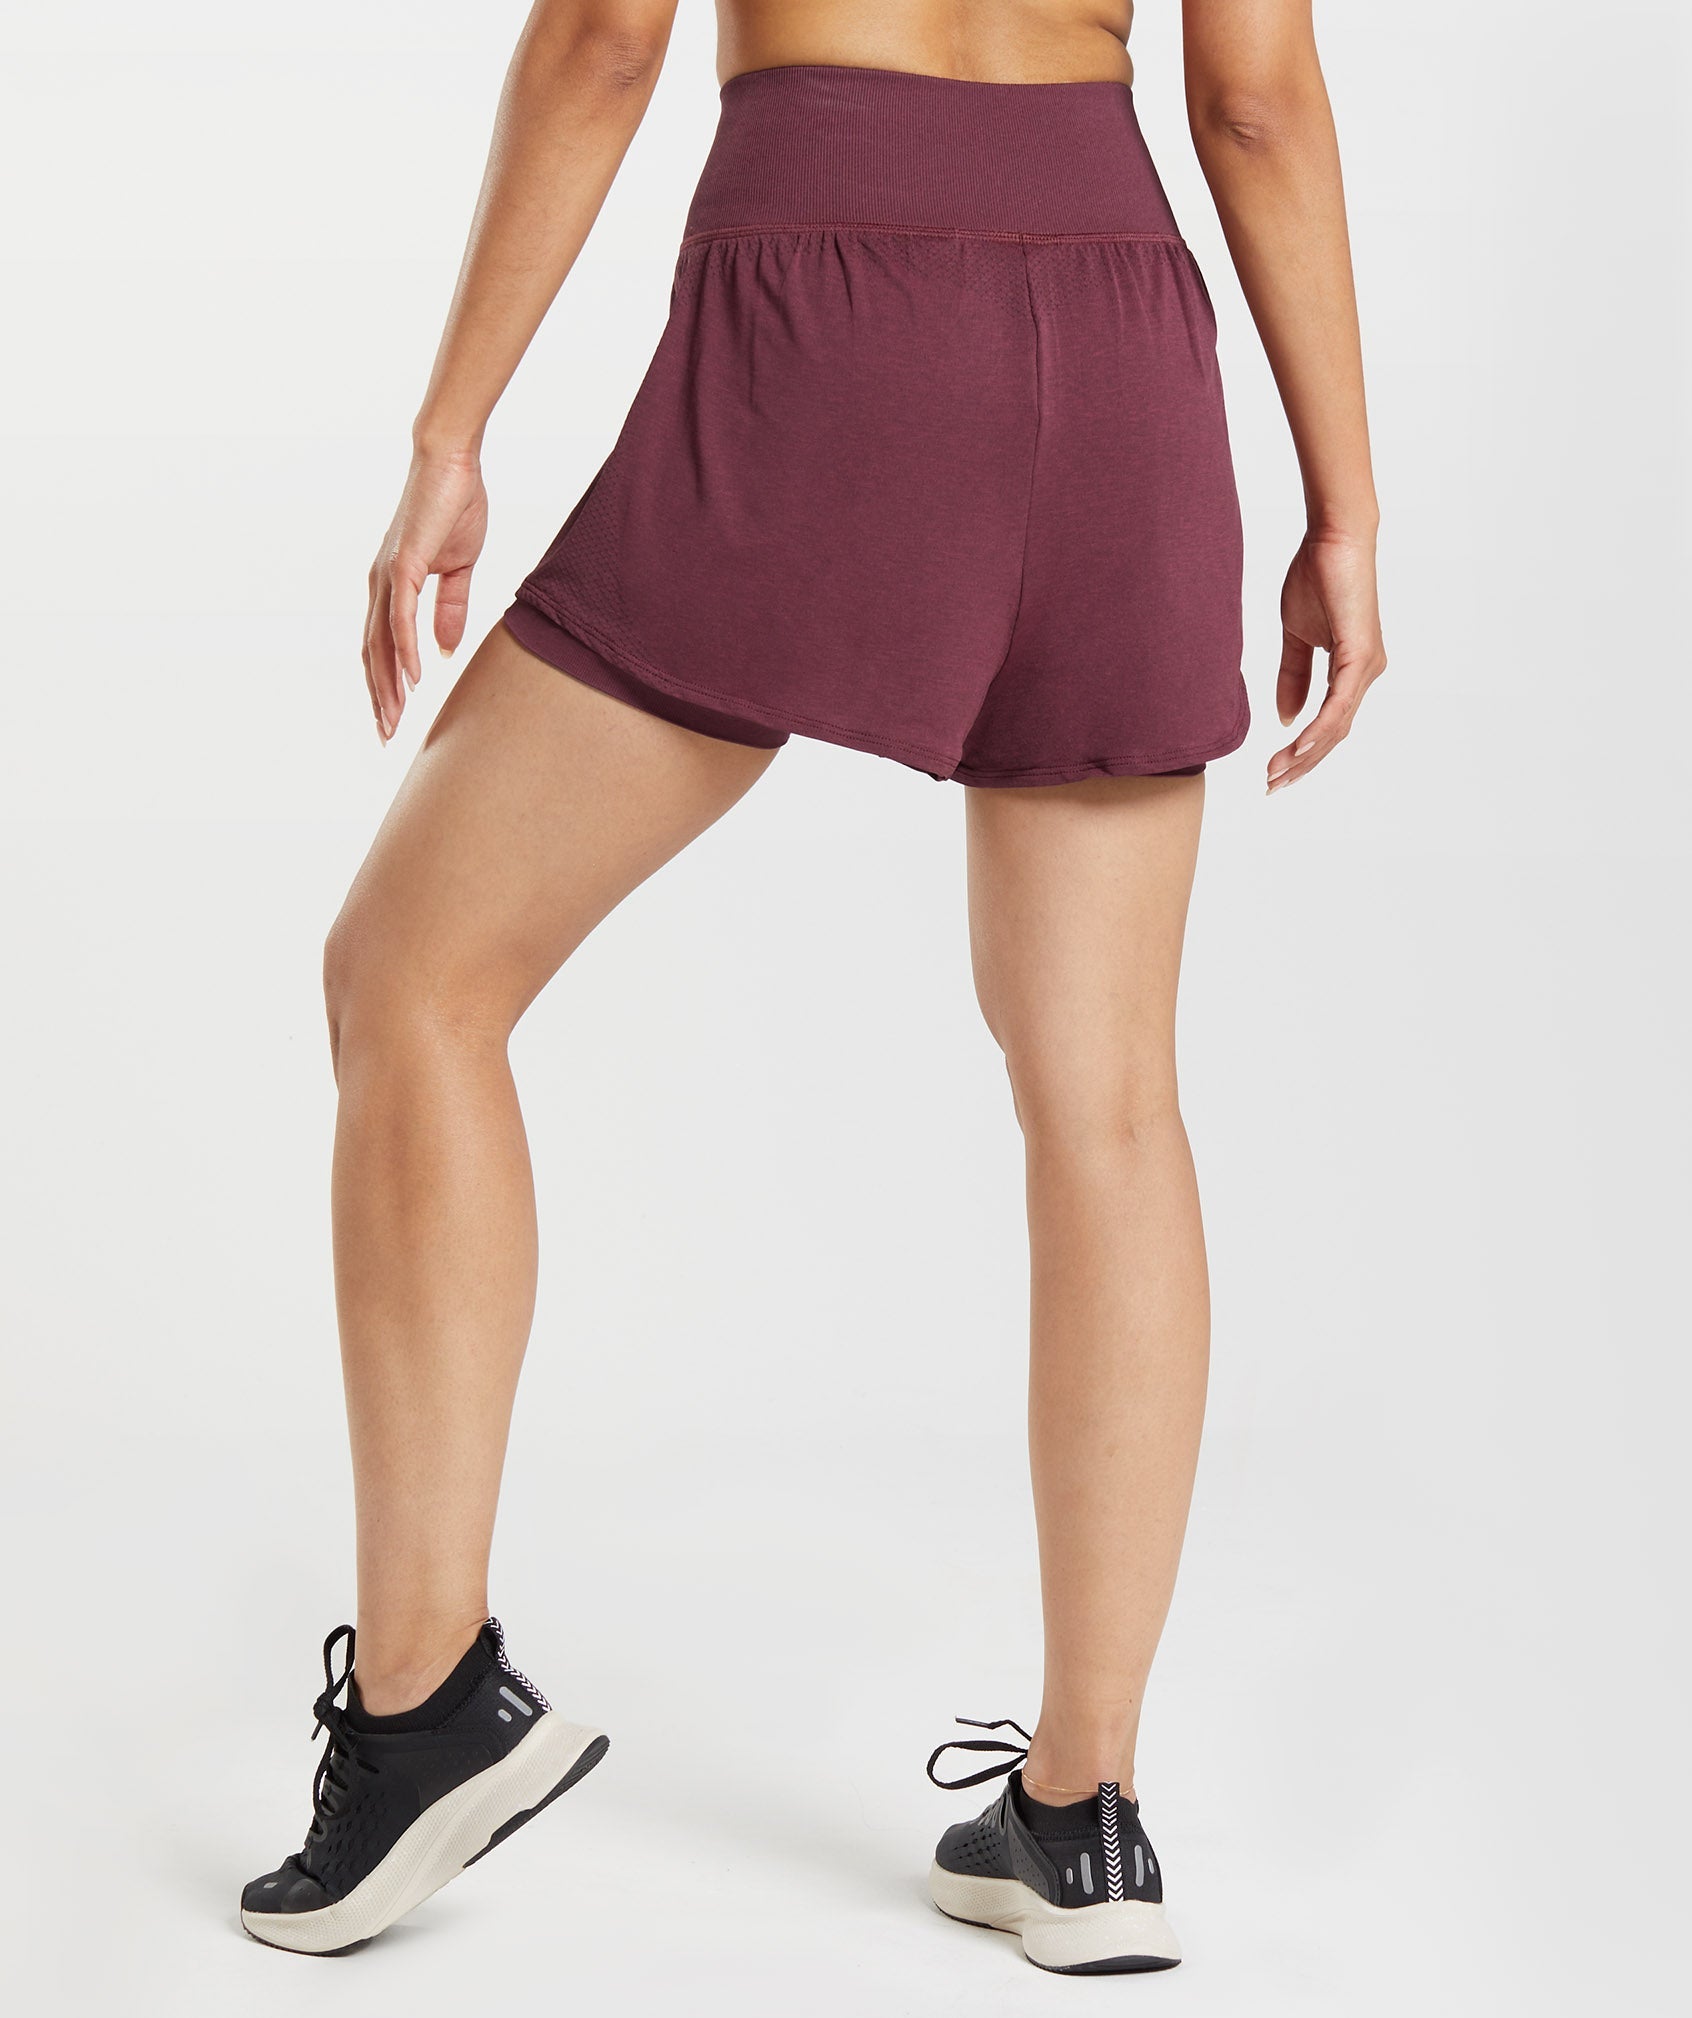 Gymshark Yellow Vital Seamless Shorts 2.0 Size M - $25 - From clarissa